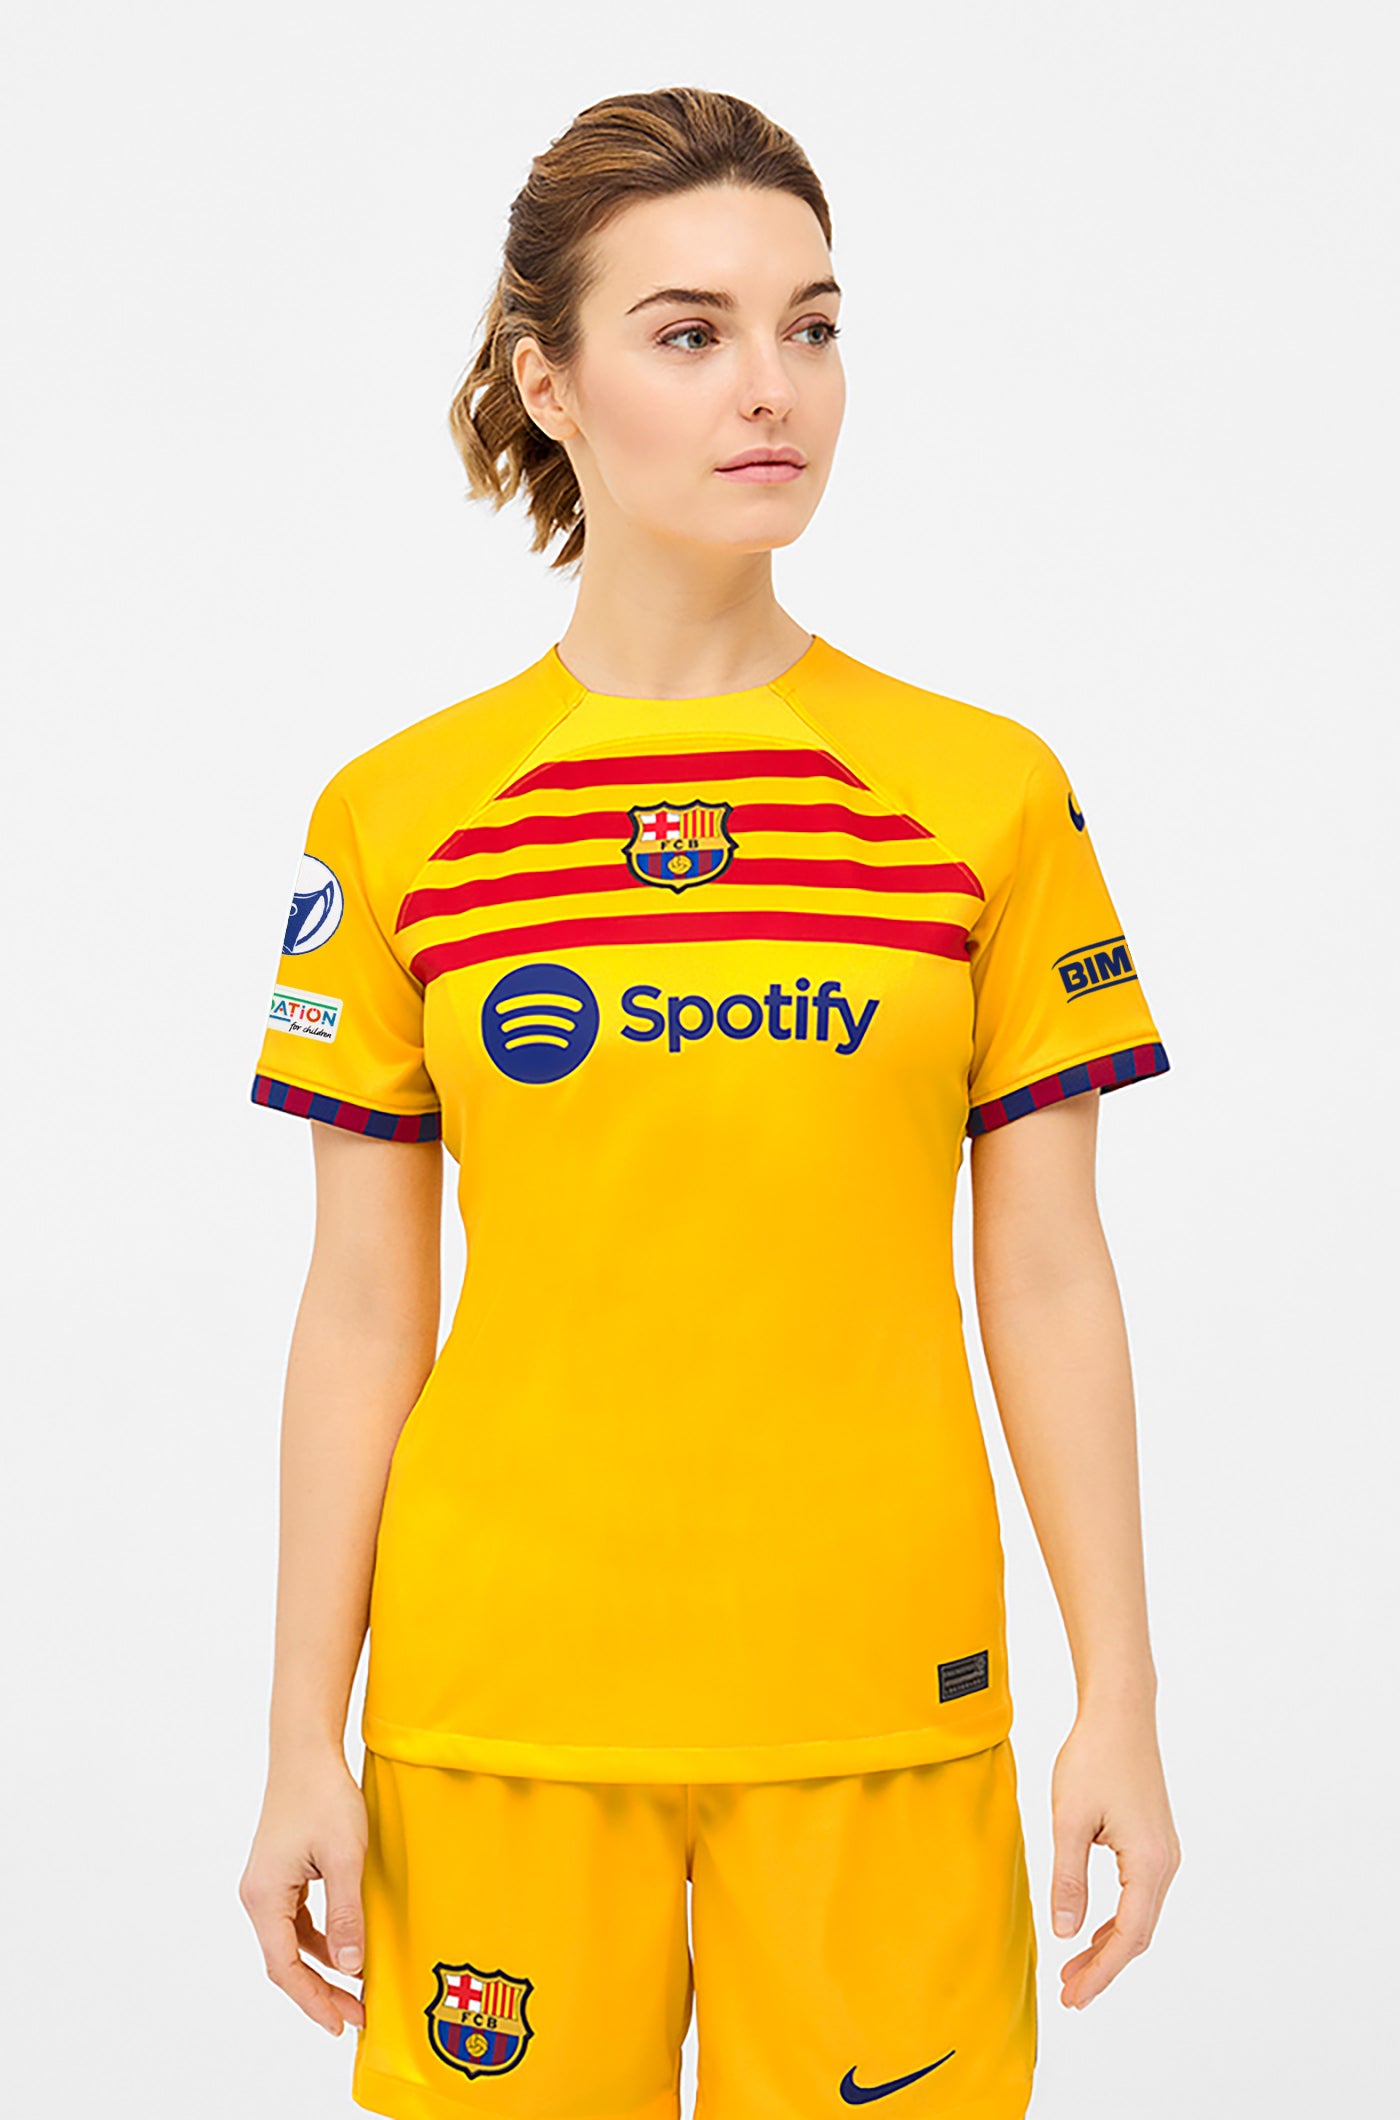 UWCL FC Barcelona fourth shirt 23/24 - Women  - MARÍA LEÓN